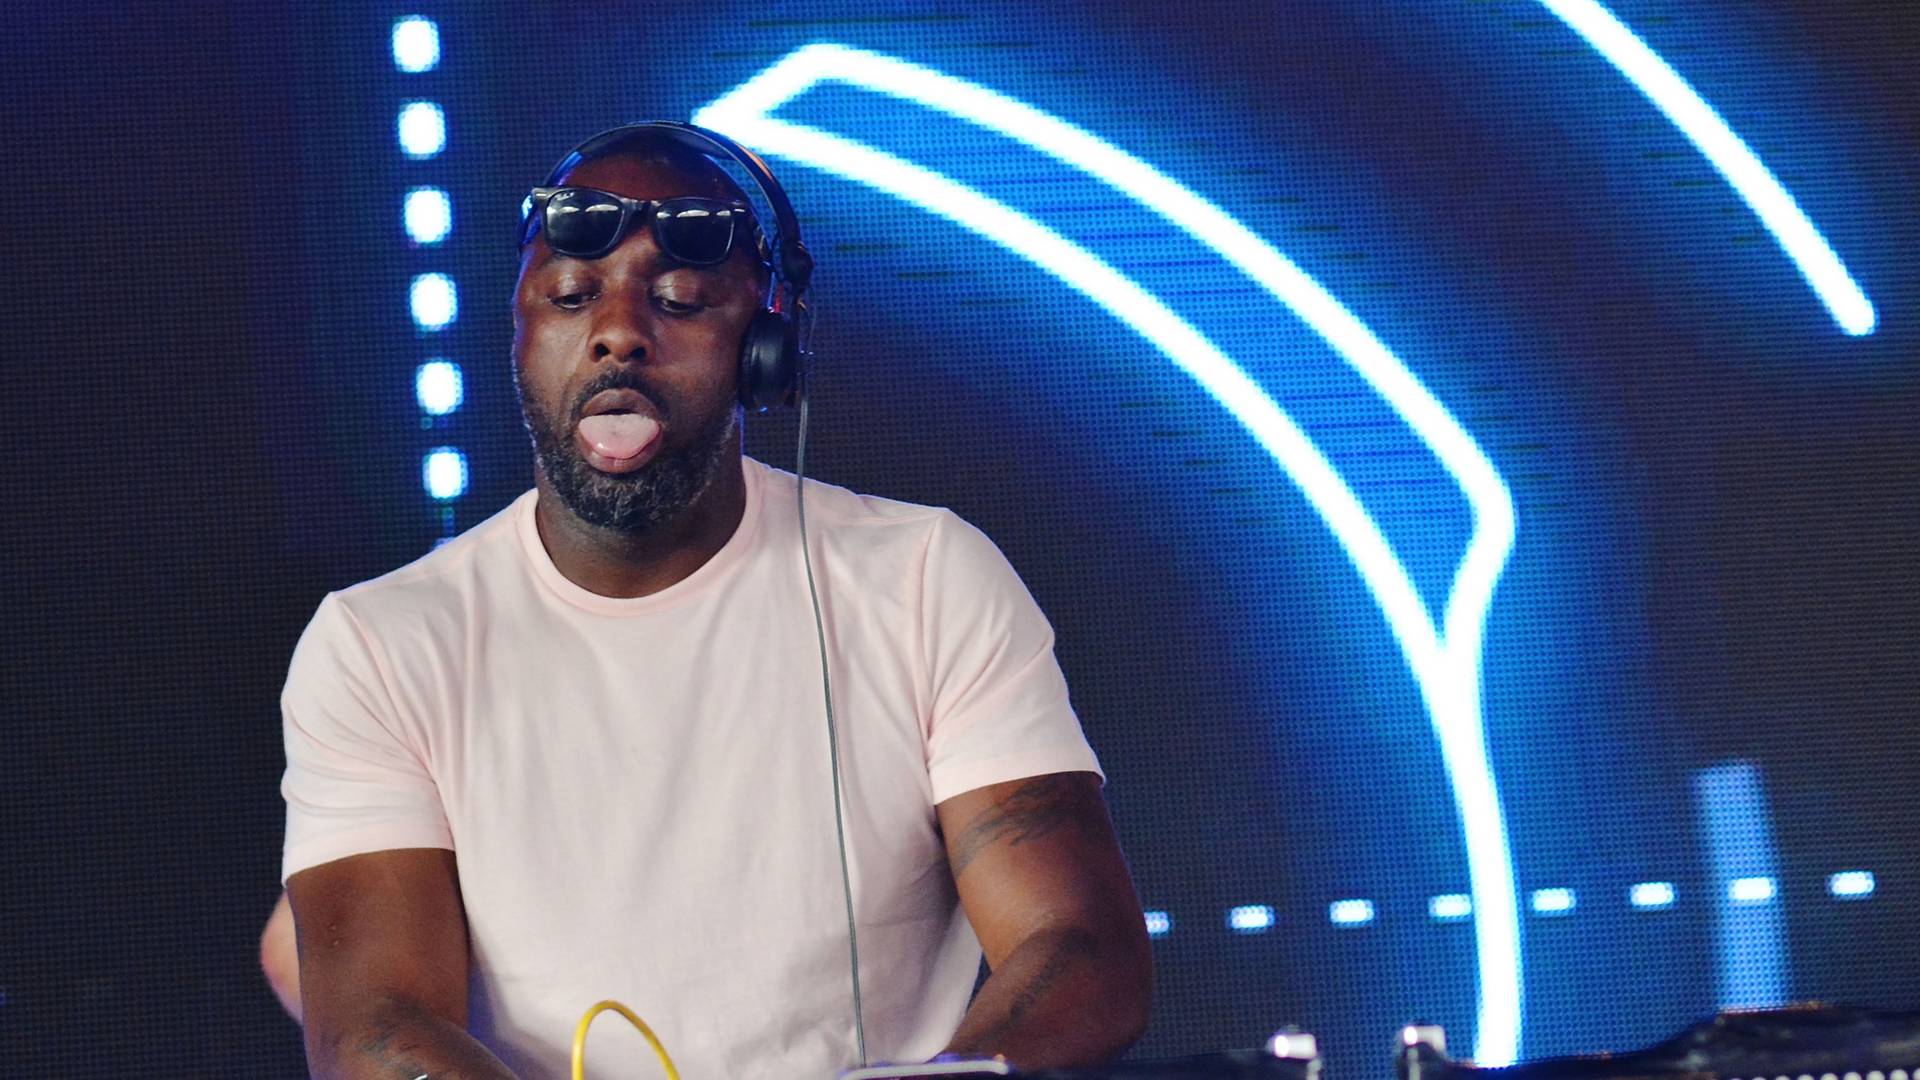 Idris Elba zagra DJ-ski set na Coachelli. To tylko kolejna nietypowa pasja tego aktora